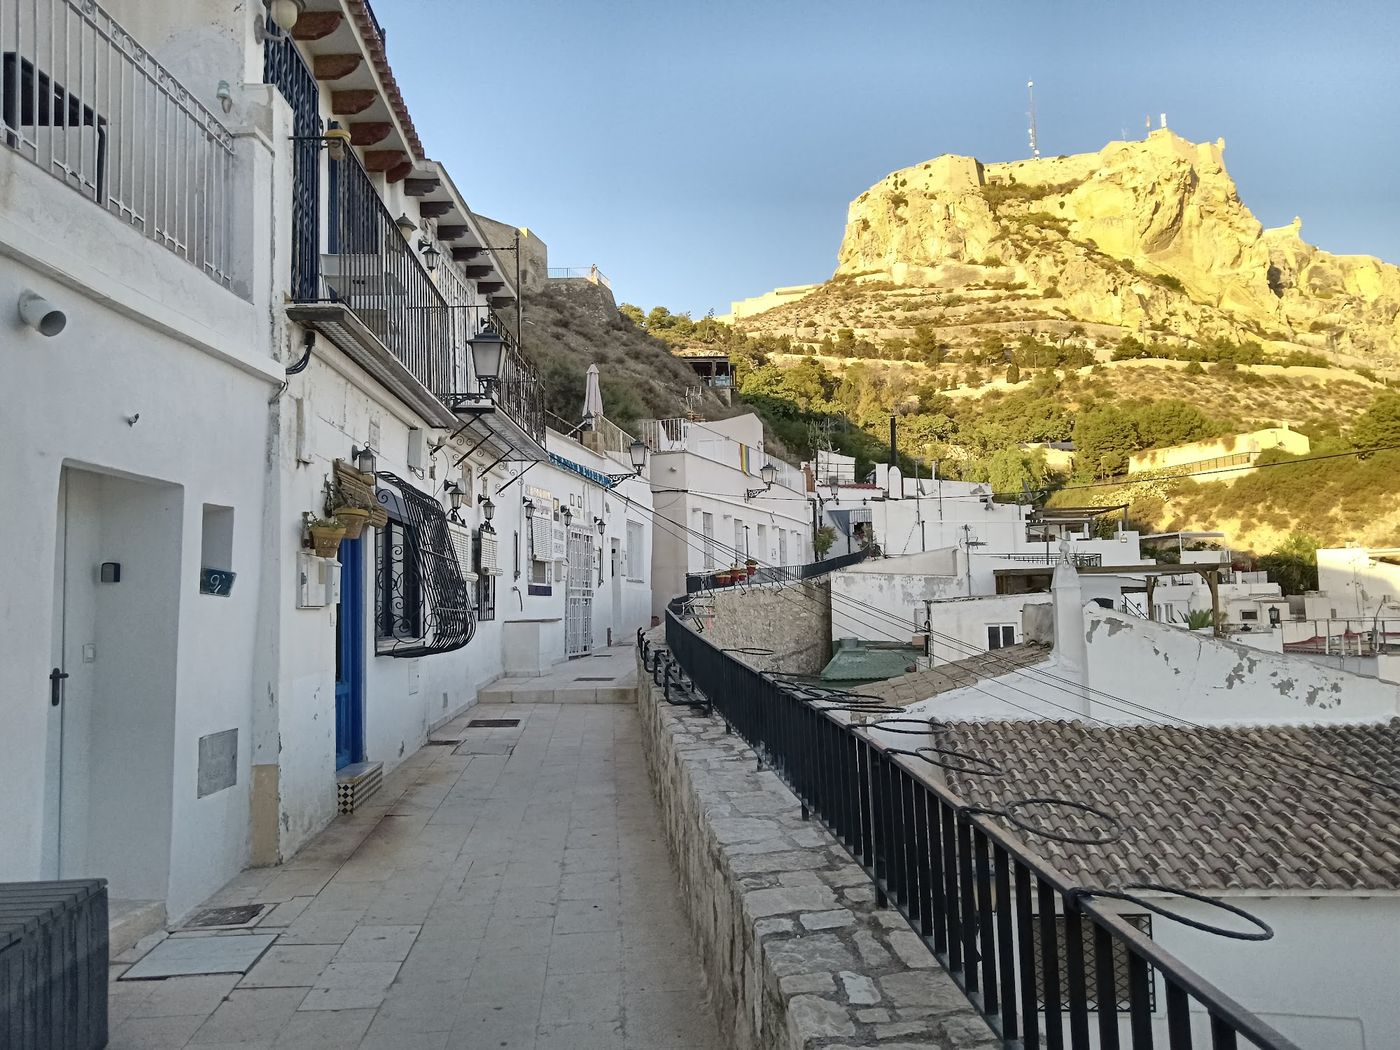 Entdecke das charmante Viertel Alicantes